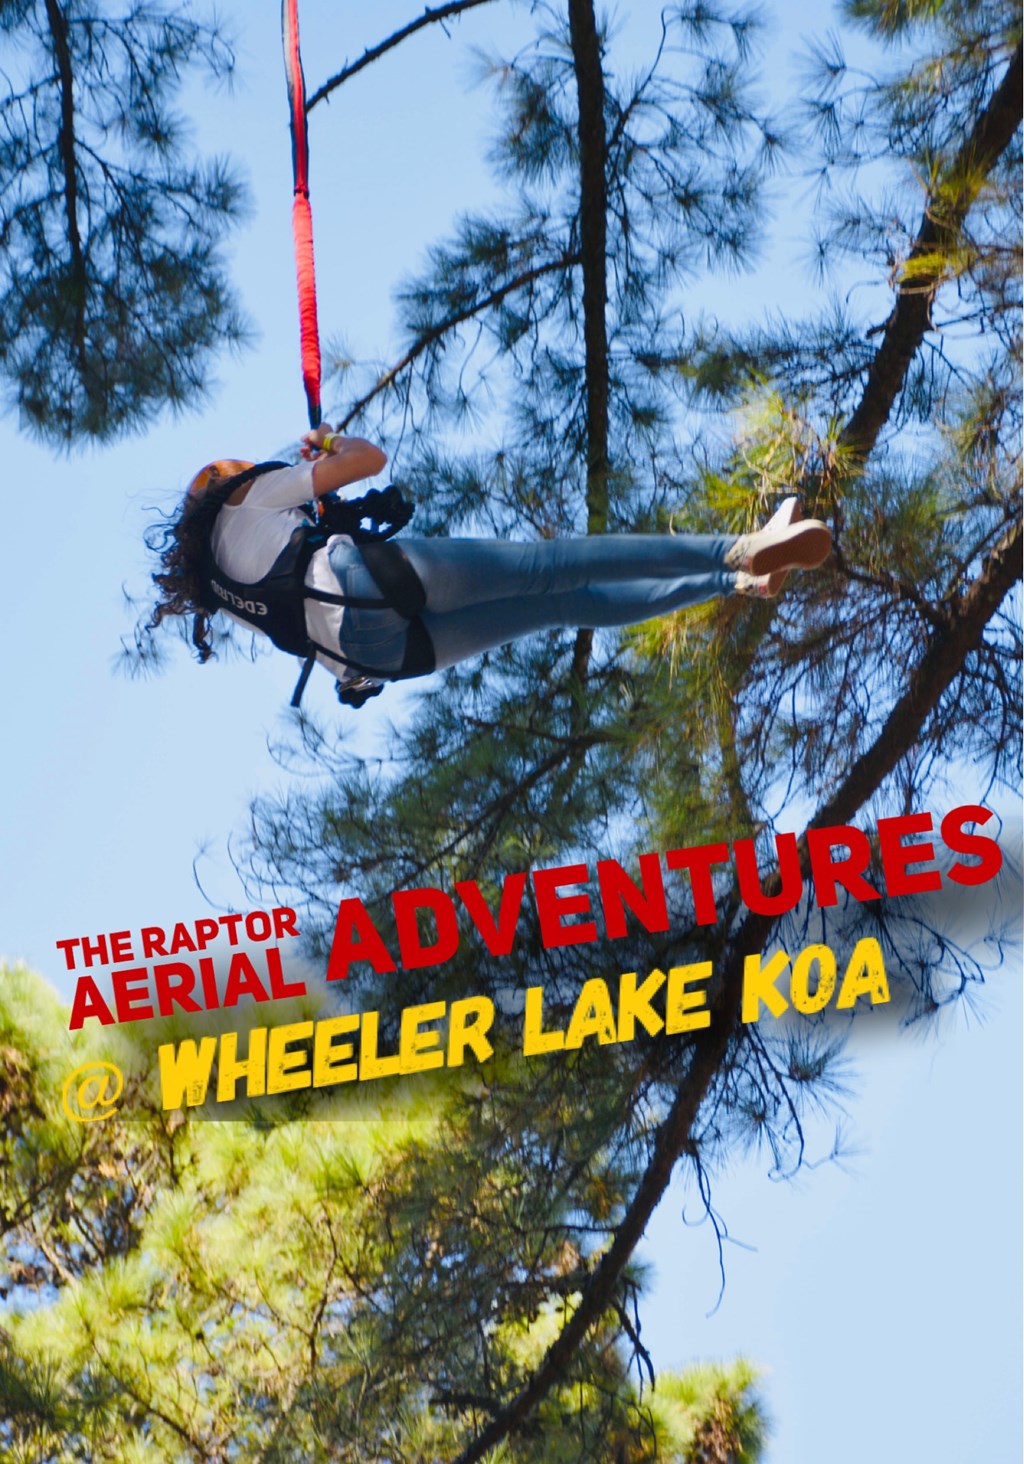 New Aerial Rope Park Zipline at Decatur / Wheeler Lake KOA